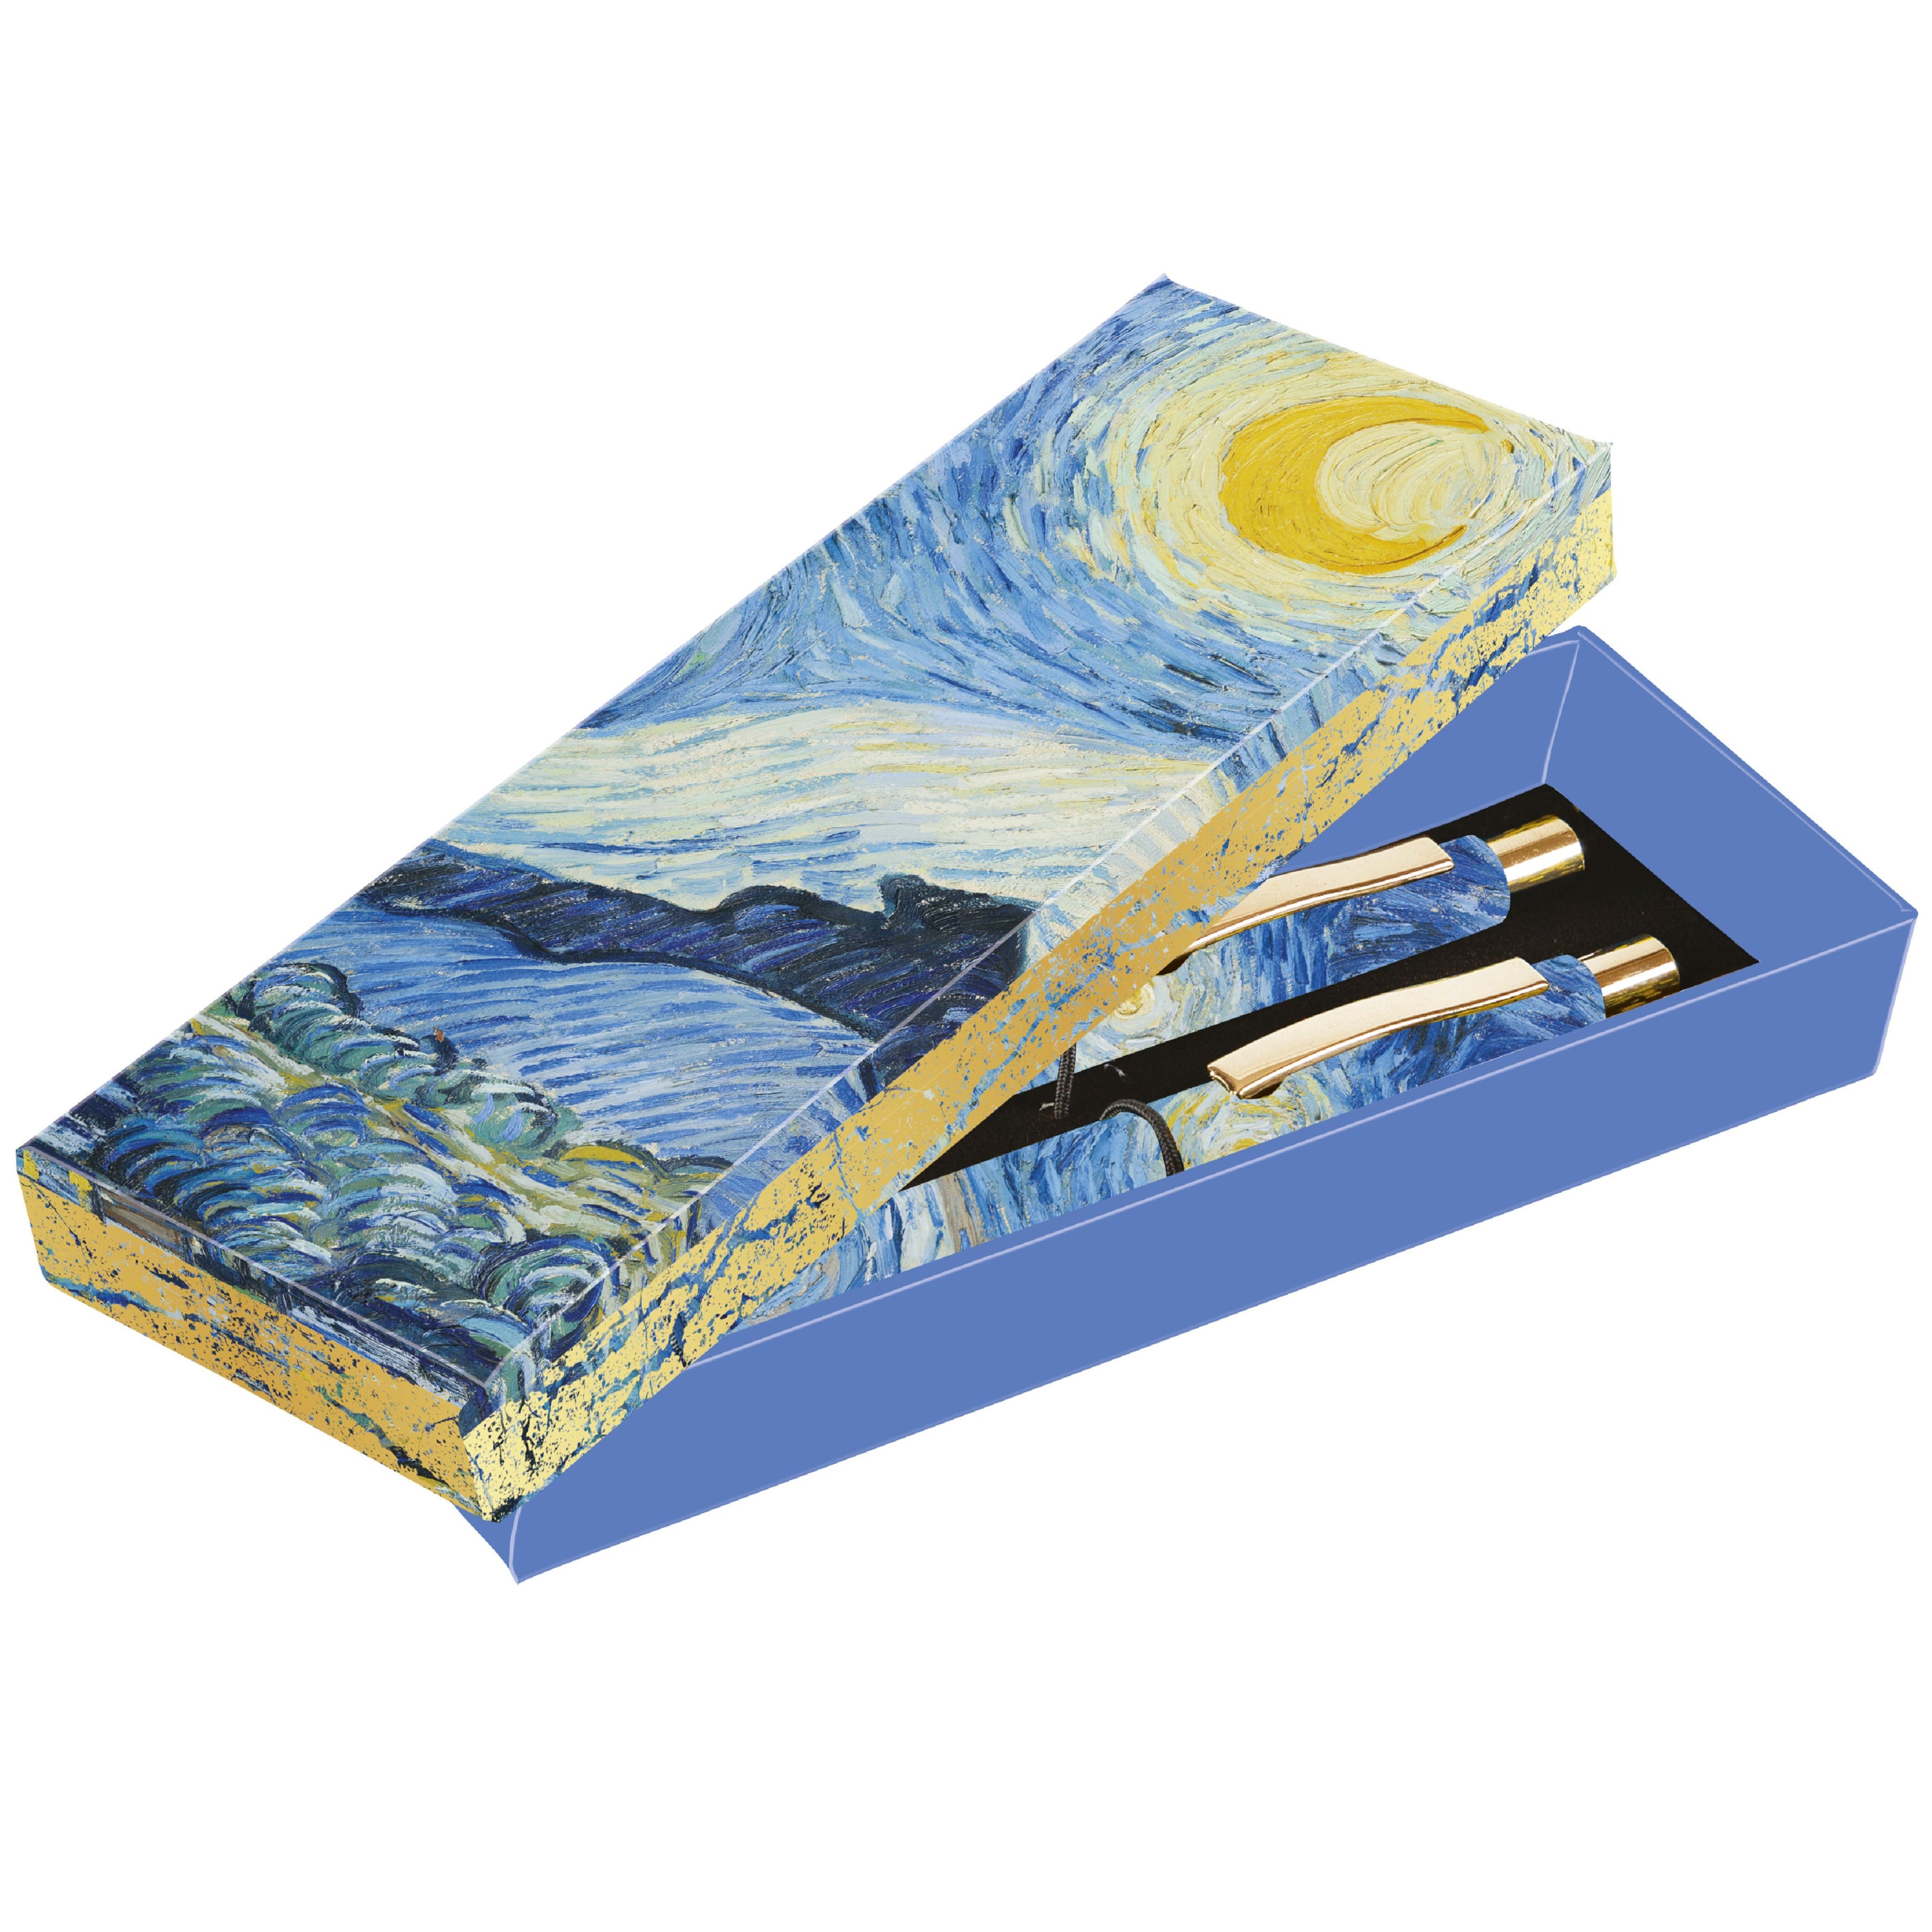 Pen Set Gifts - Van Gogh - Starry Night